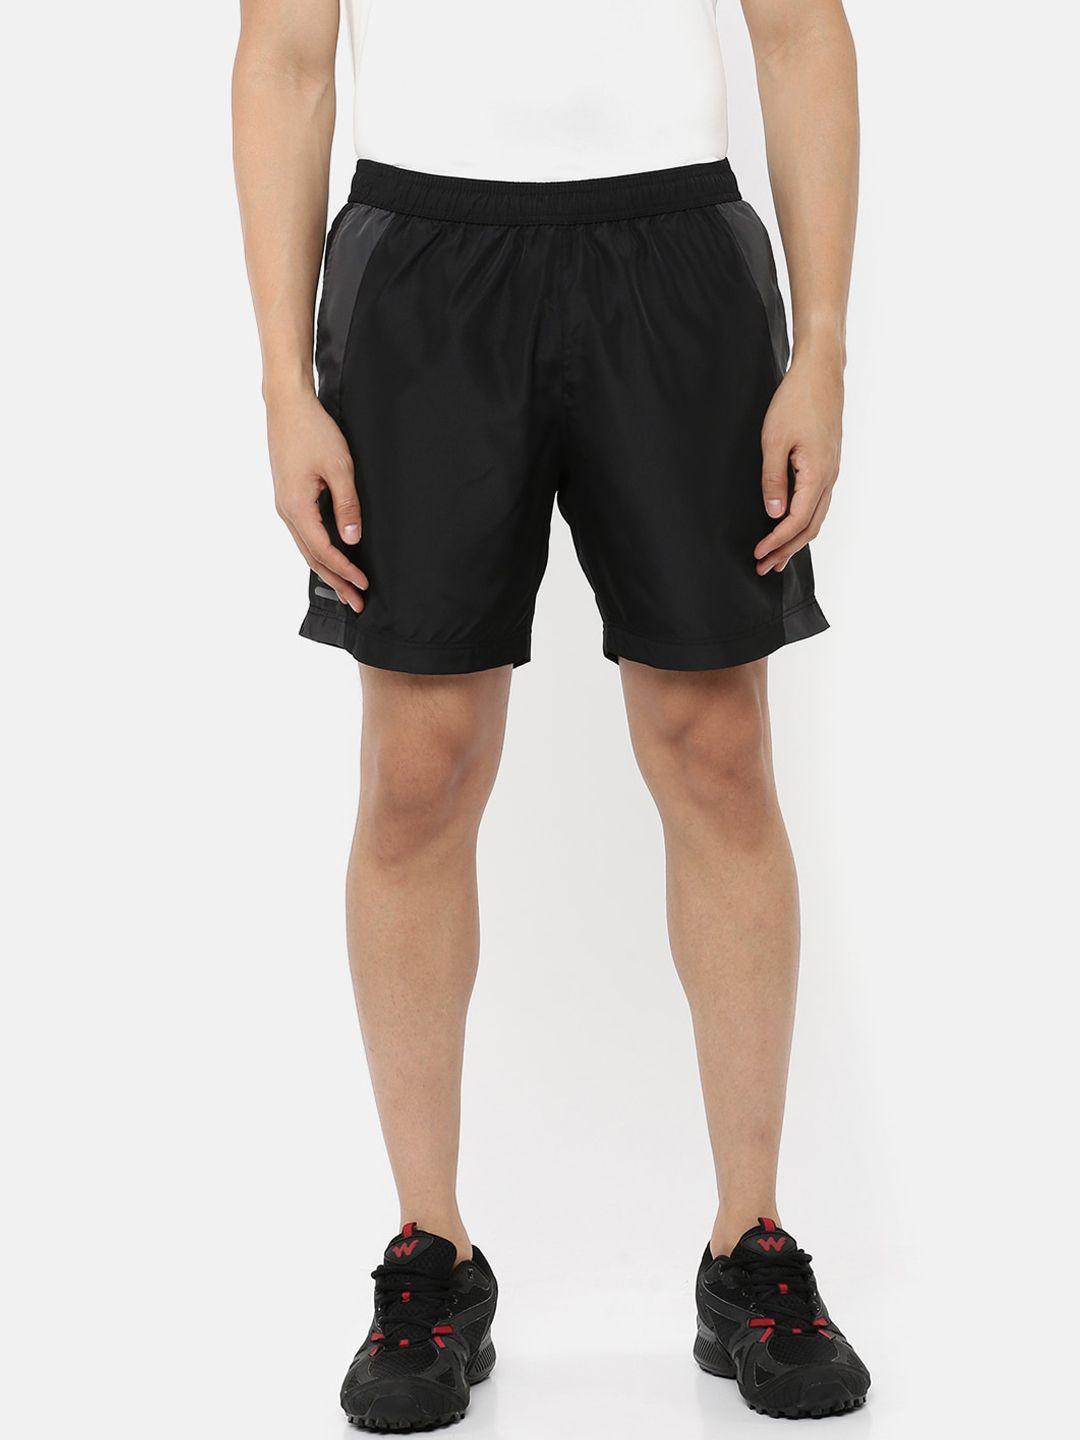 wildcraft men black mid-rise sports shorts